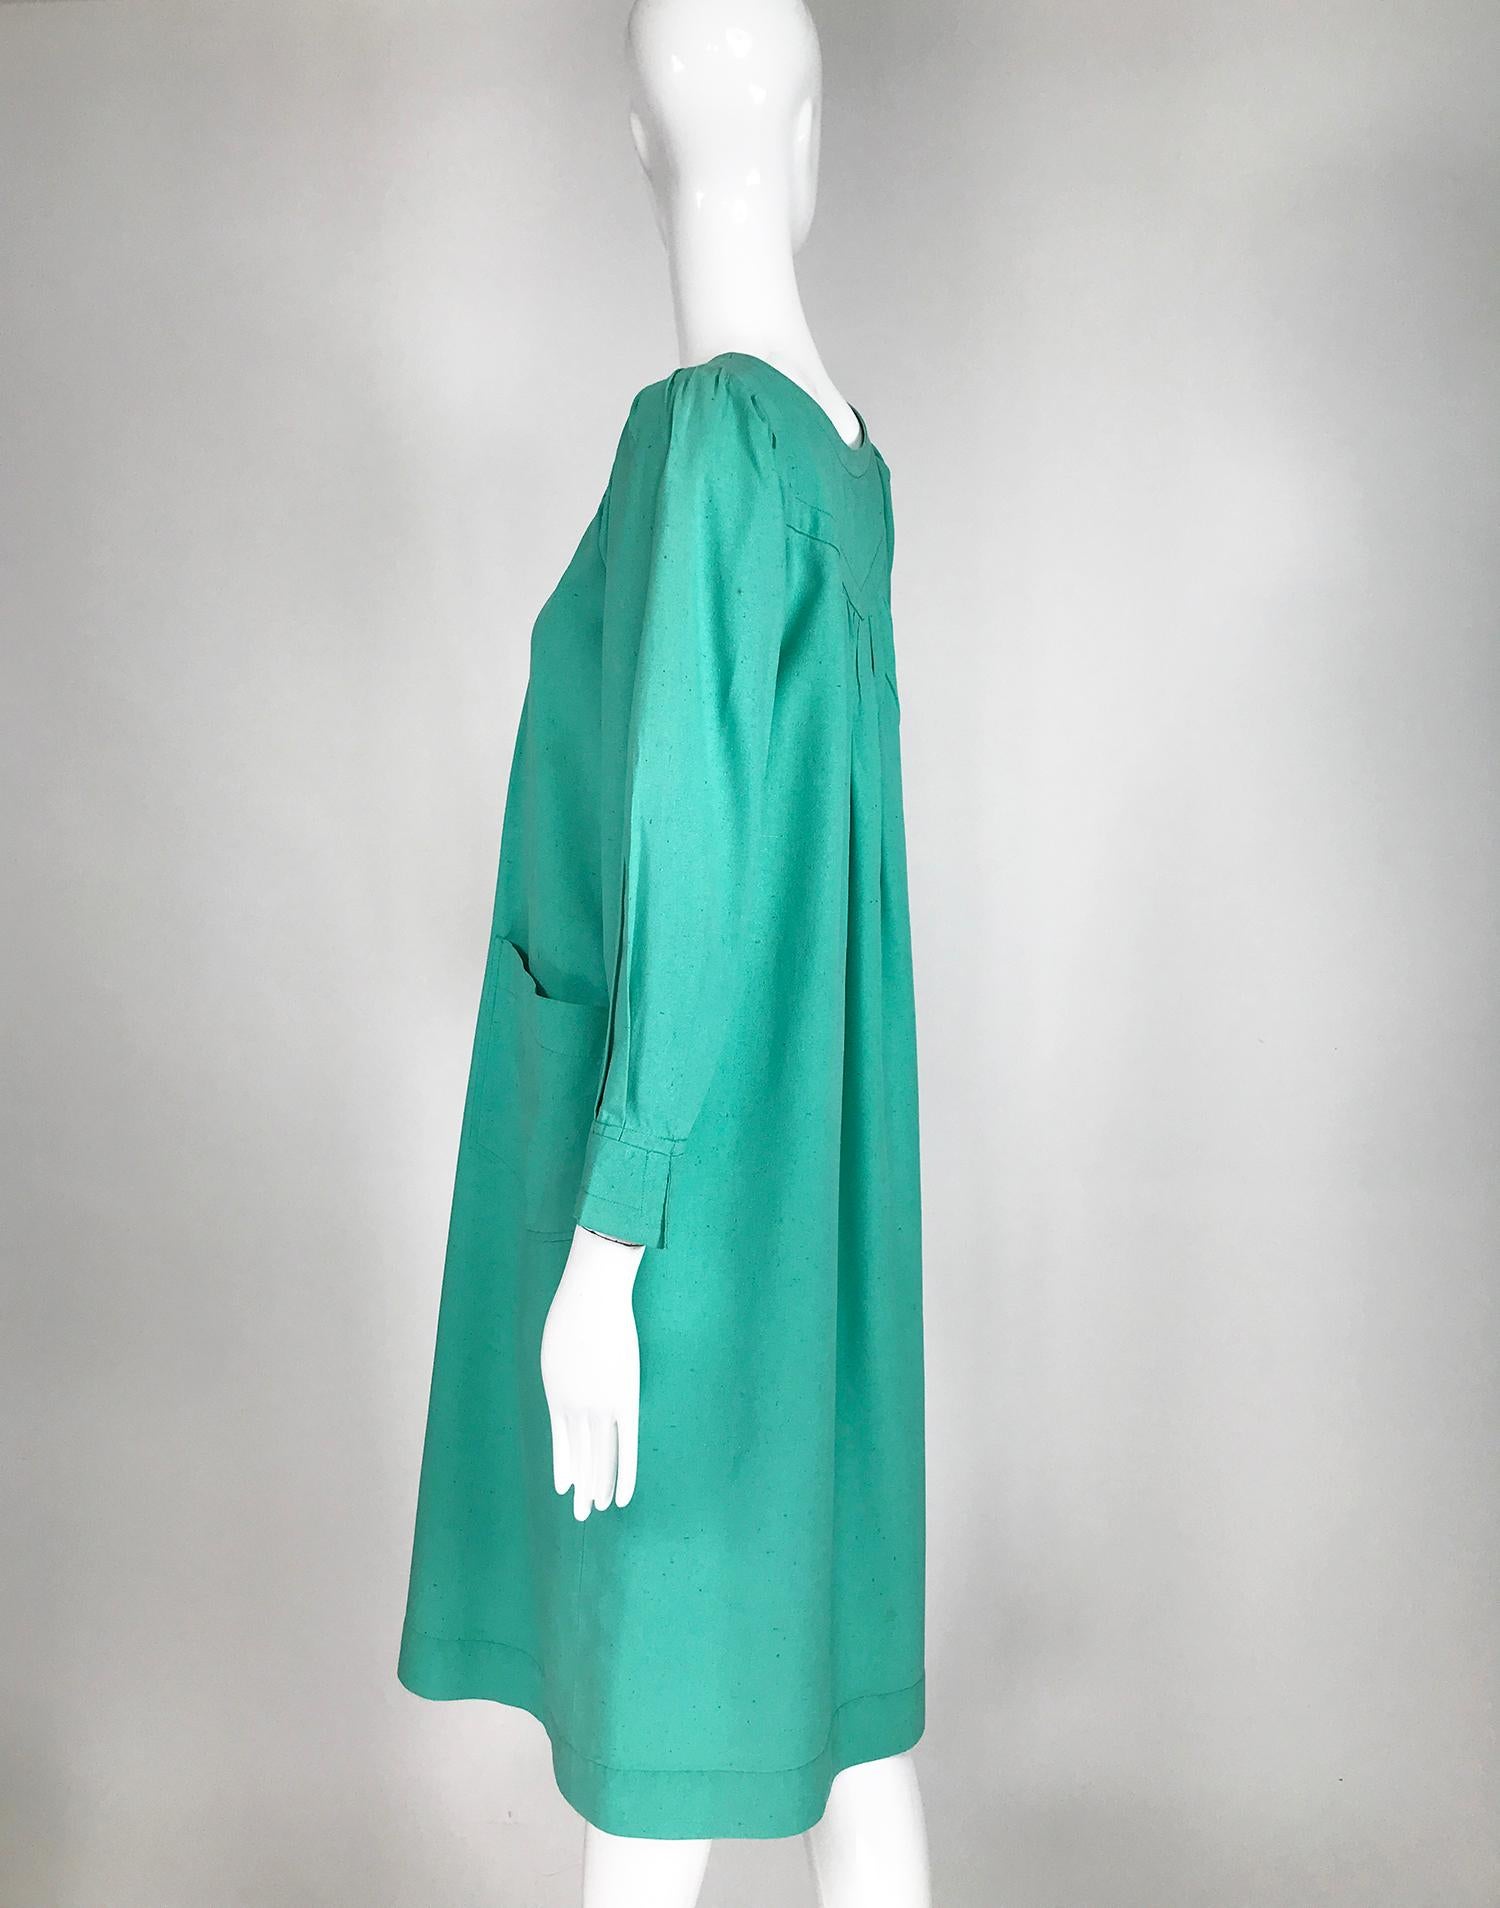 Yves Saint Laurent Rive Gauche Aqua Slub Silk Smock Dress 1970s 3